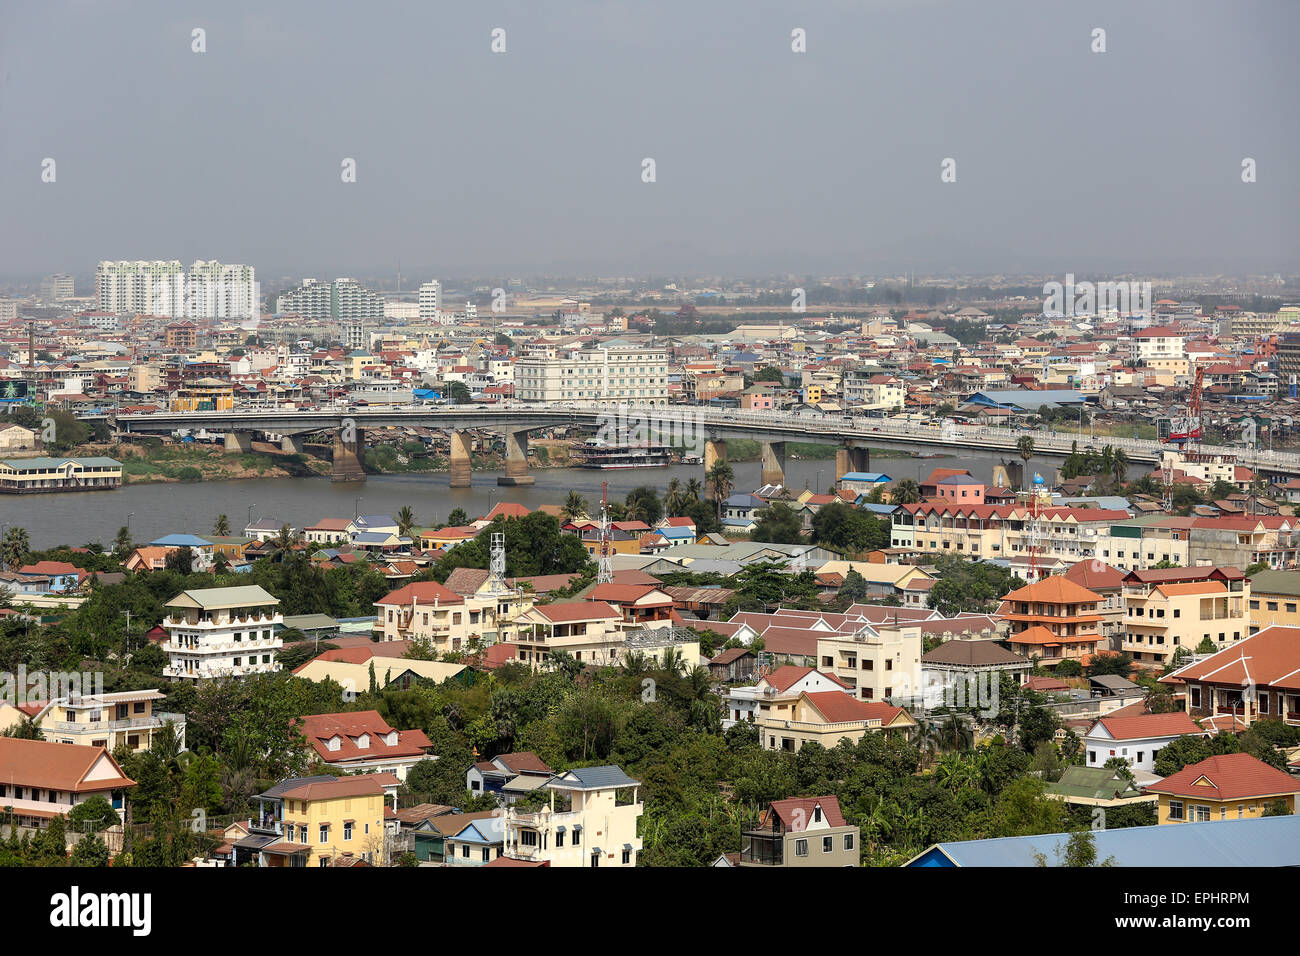 Japan bridge over the Tonle Sap river, city view, Phnom Penh, Cambodia Stock Photo